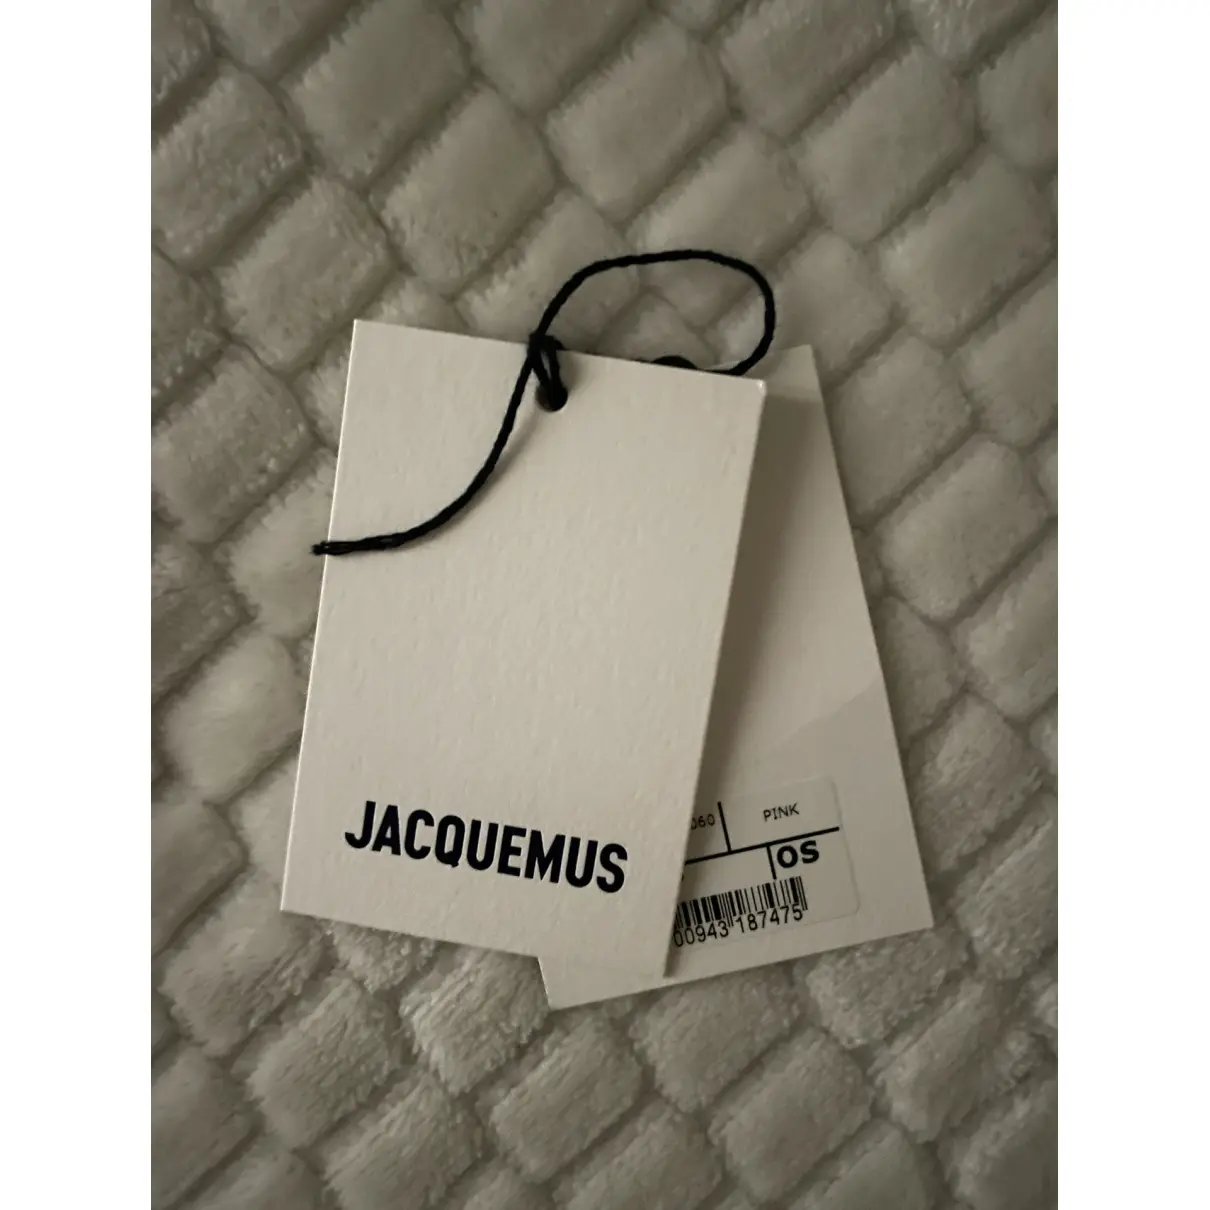 Buy Jacquemus Le Ciuciu leather handbag online